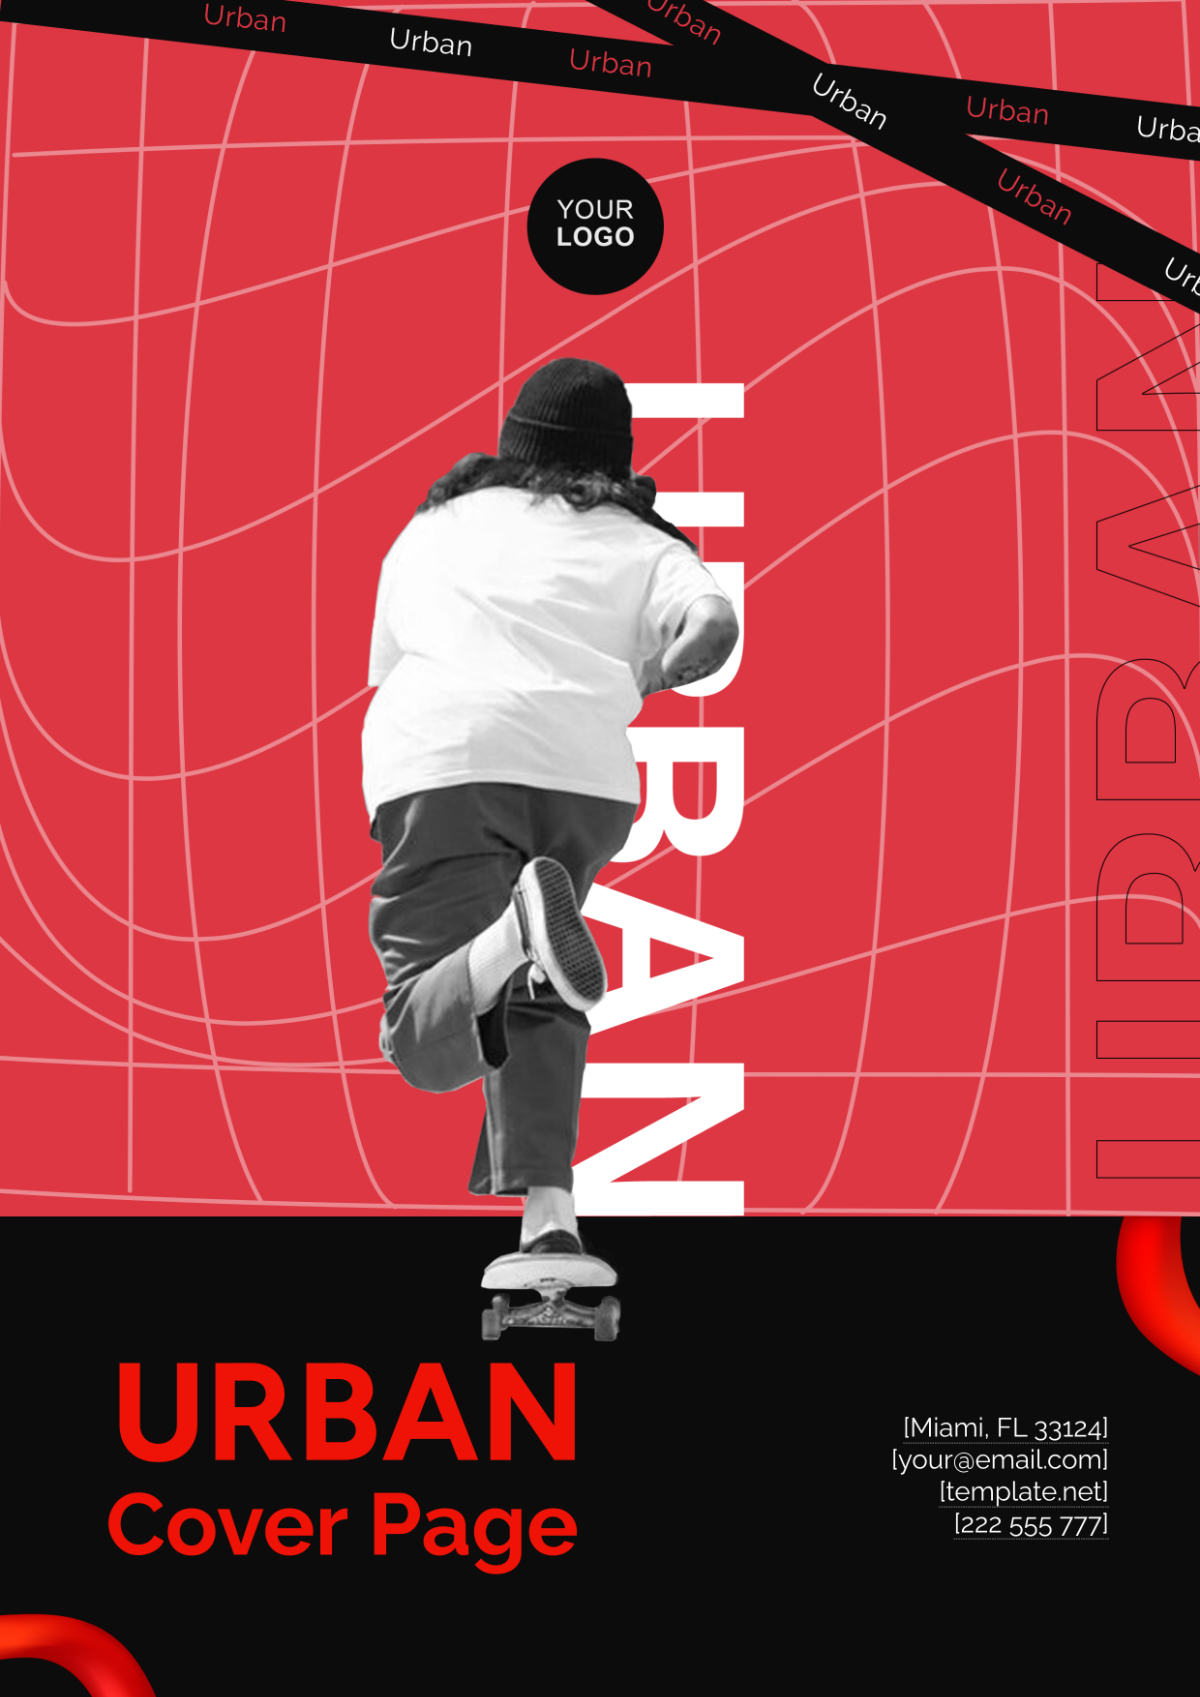 Urban Cover Page Design